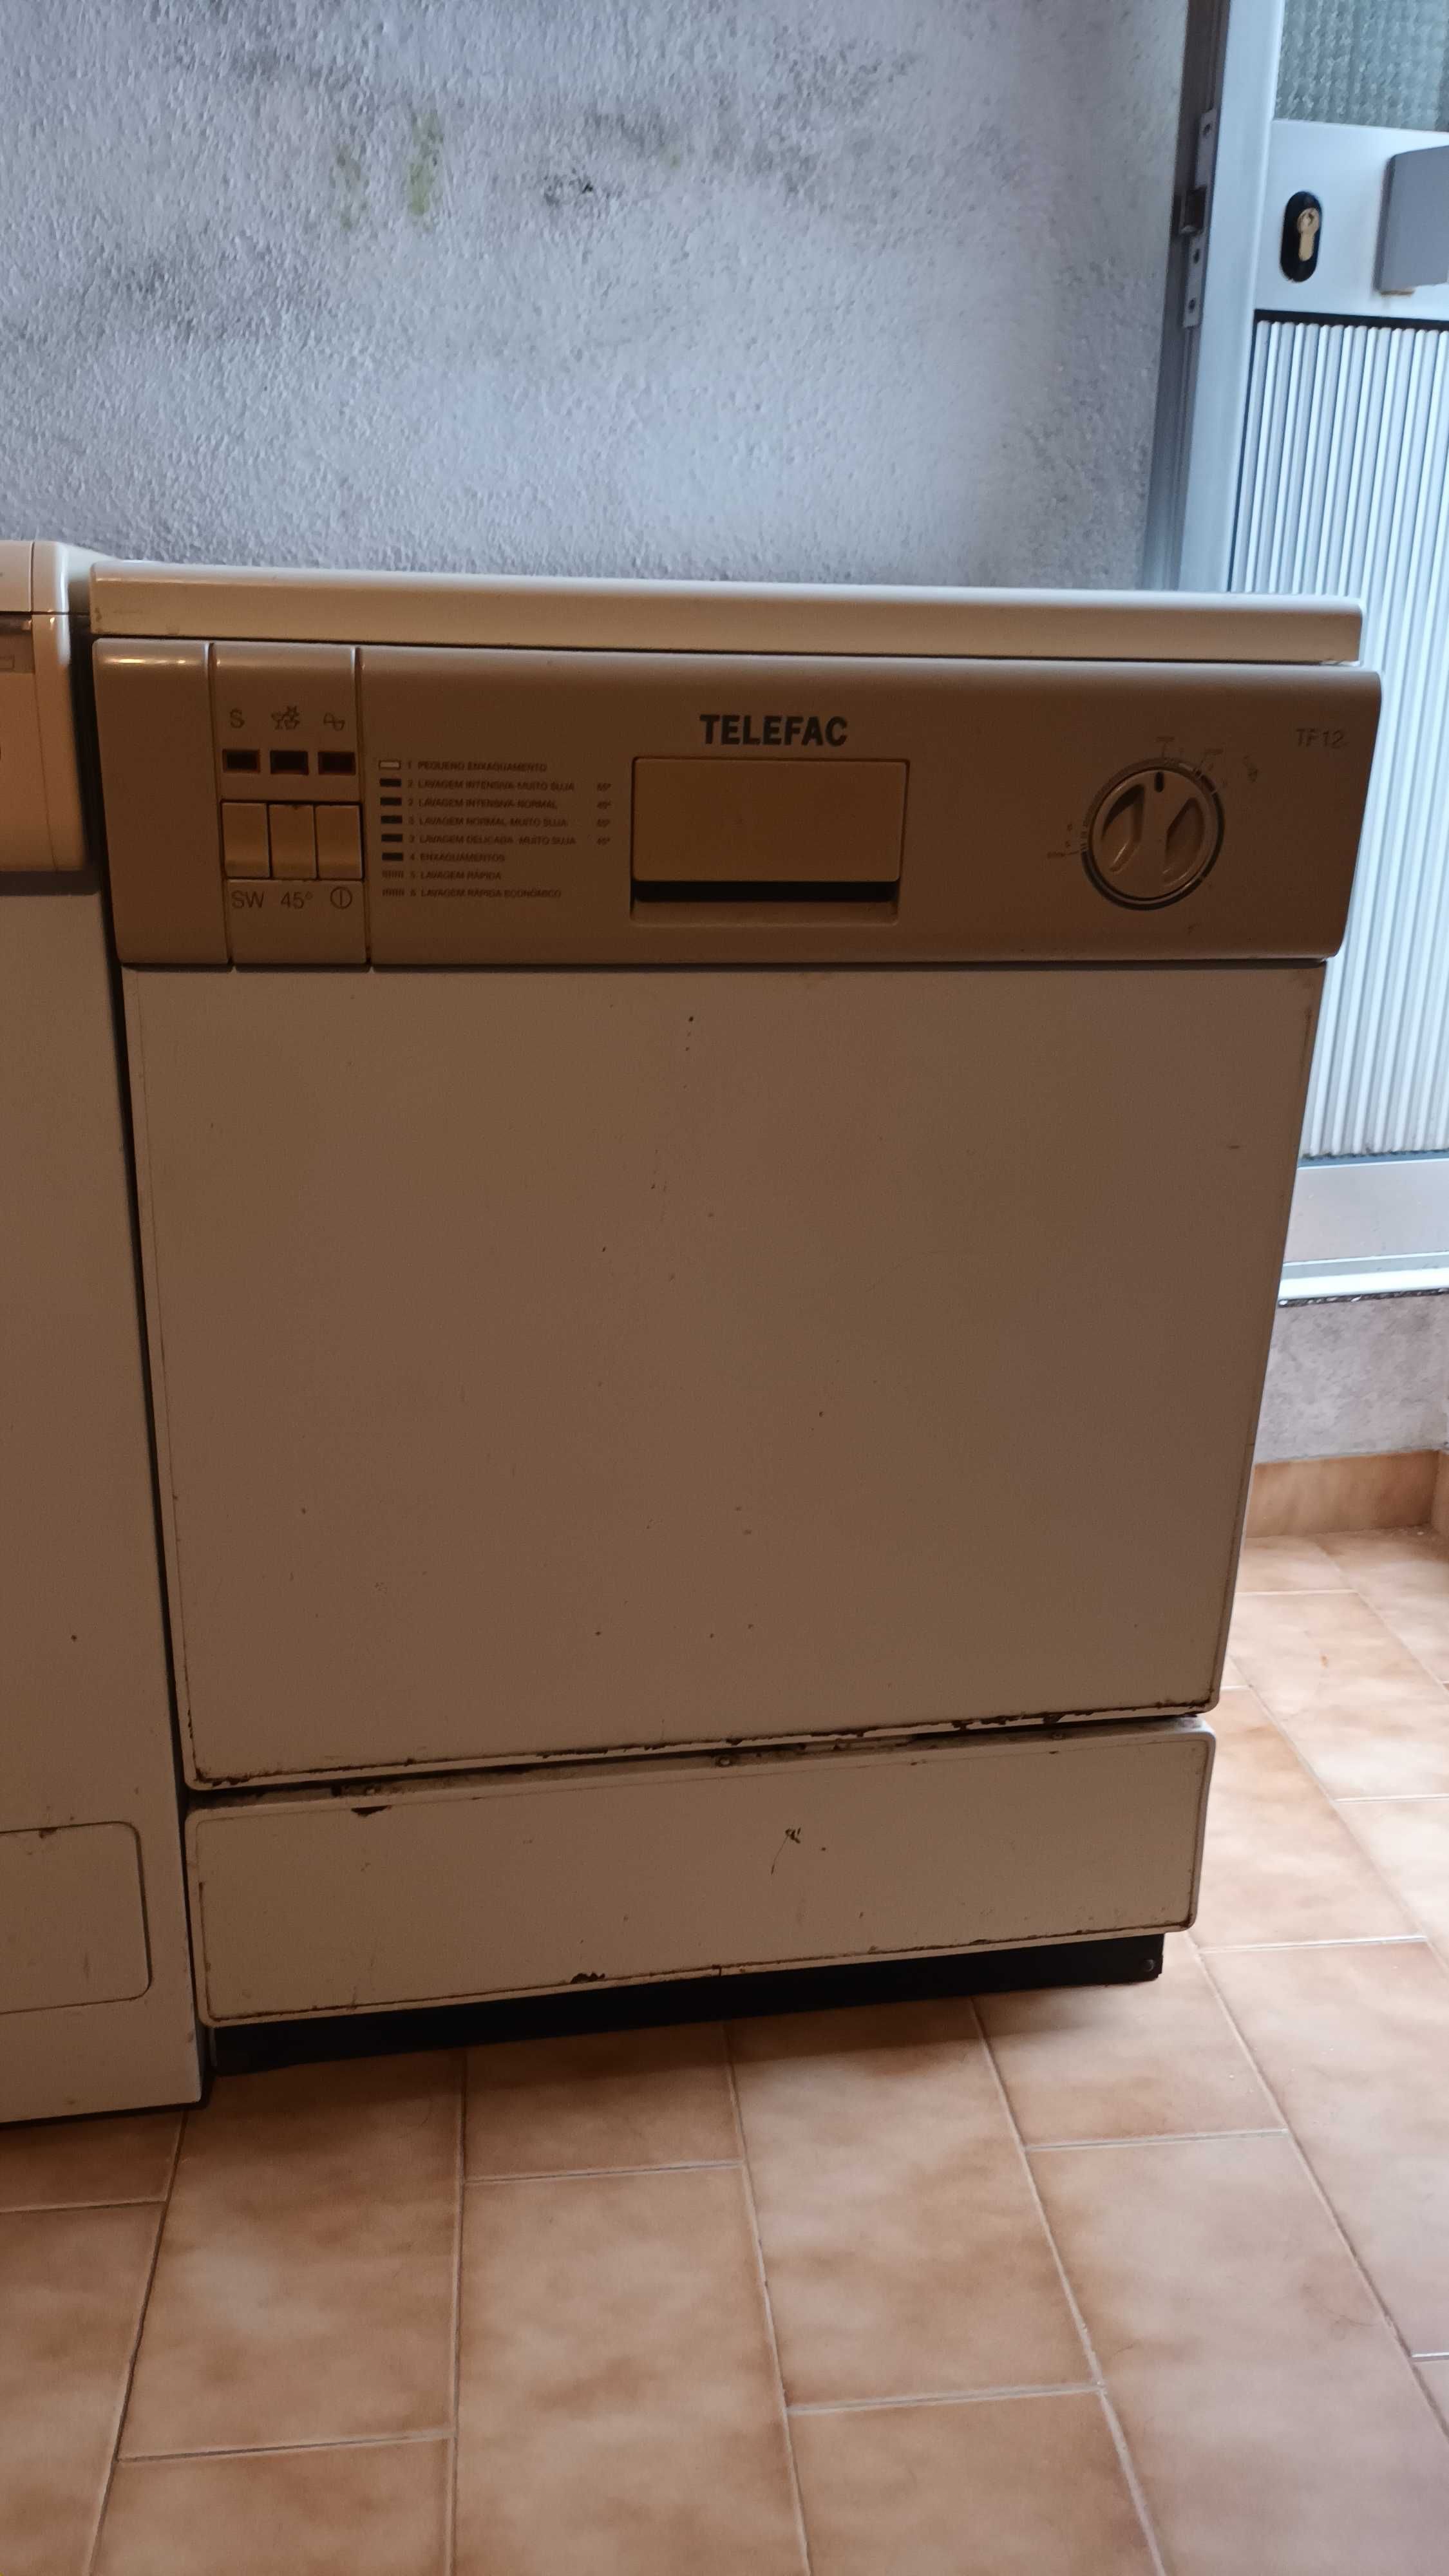 Máquina lavar loiça